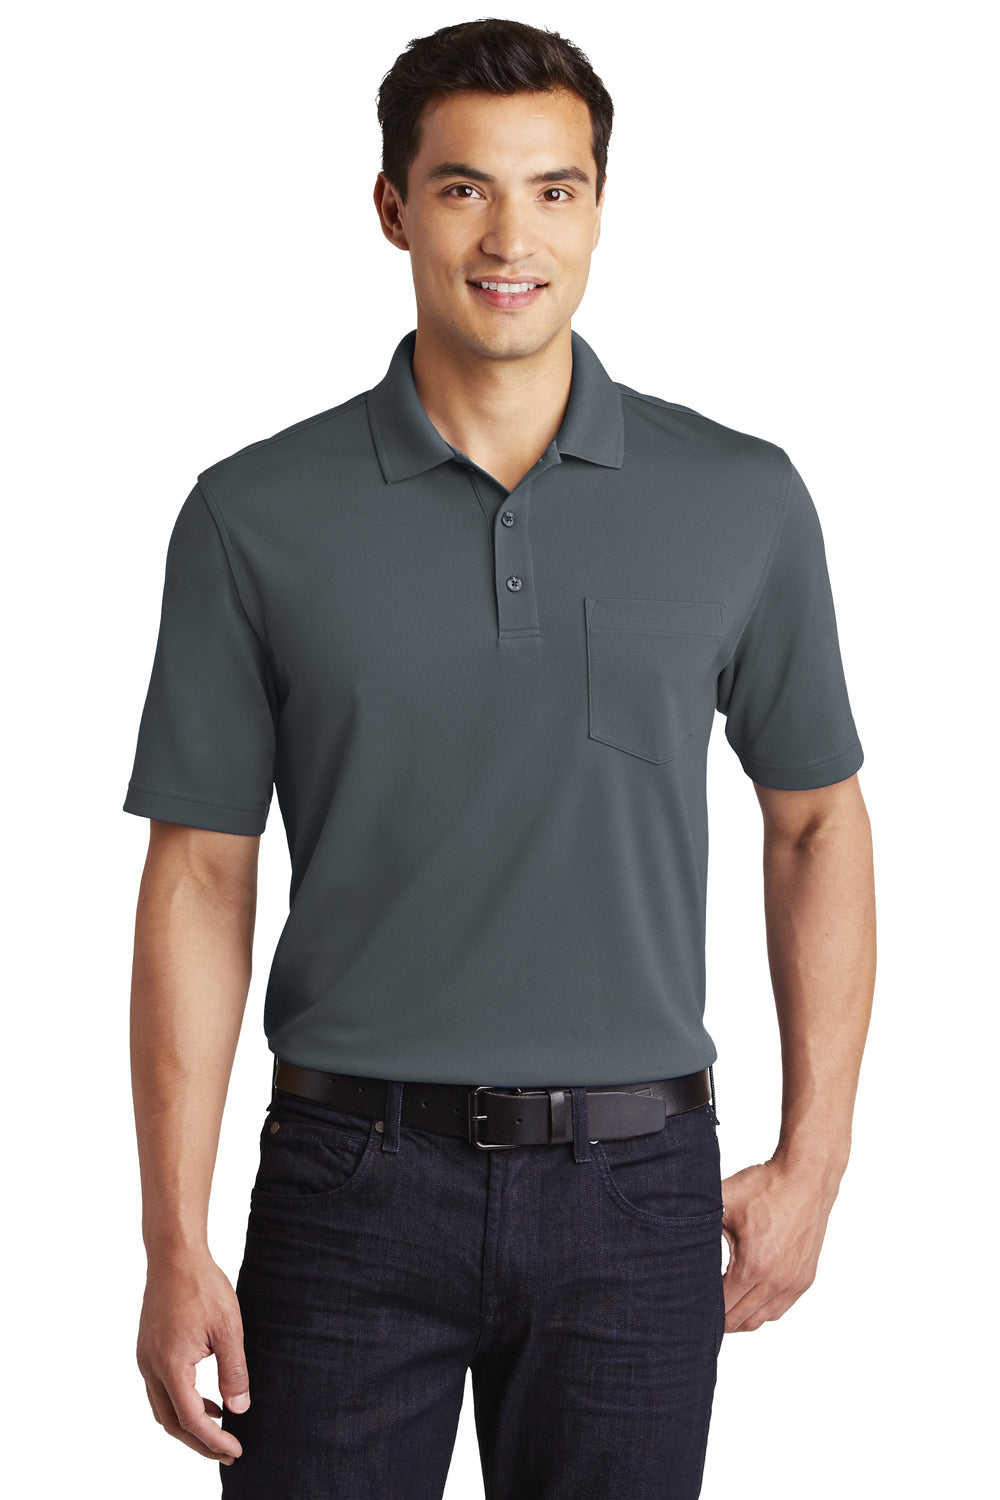 Port Authority K110P Mens Dry Zone Moisture Wicking Short Sleeve Polo Shirt w/ Pocket Graphite Grey Front